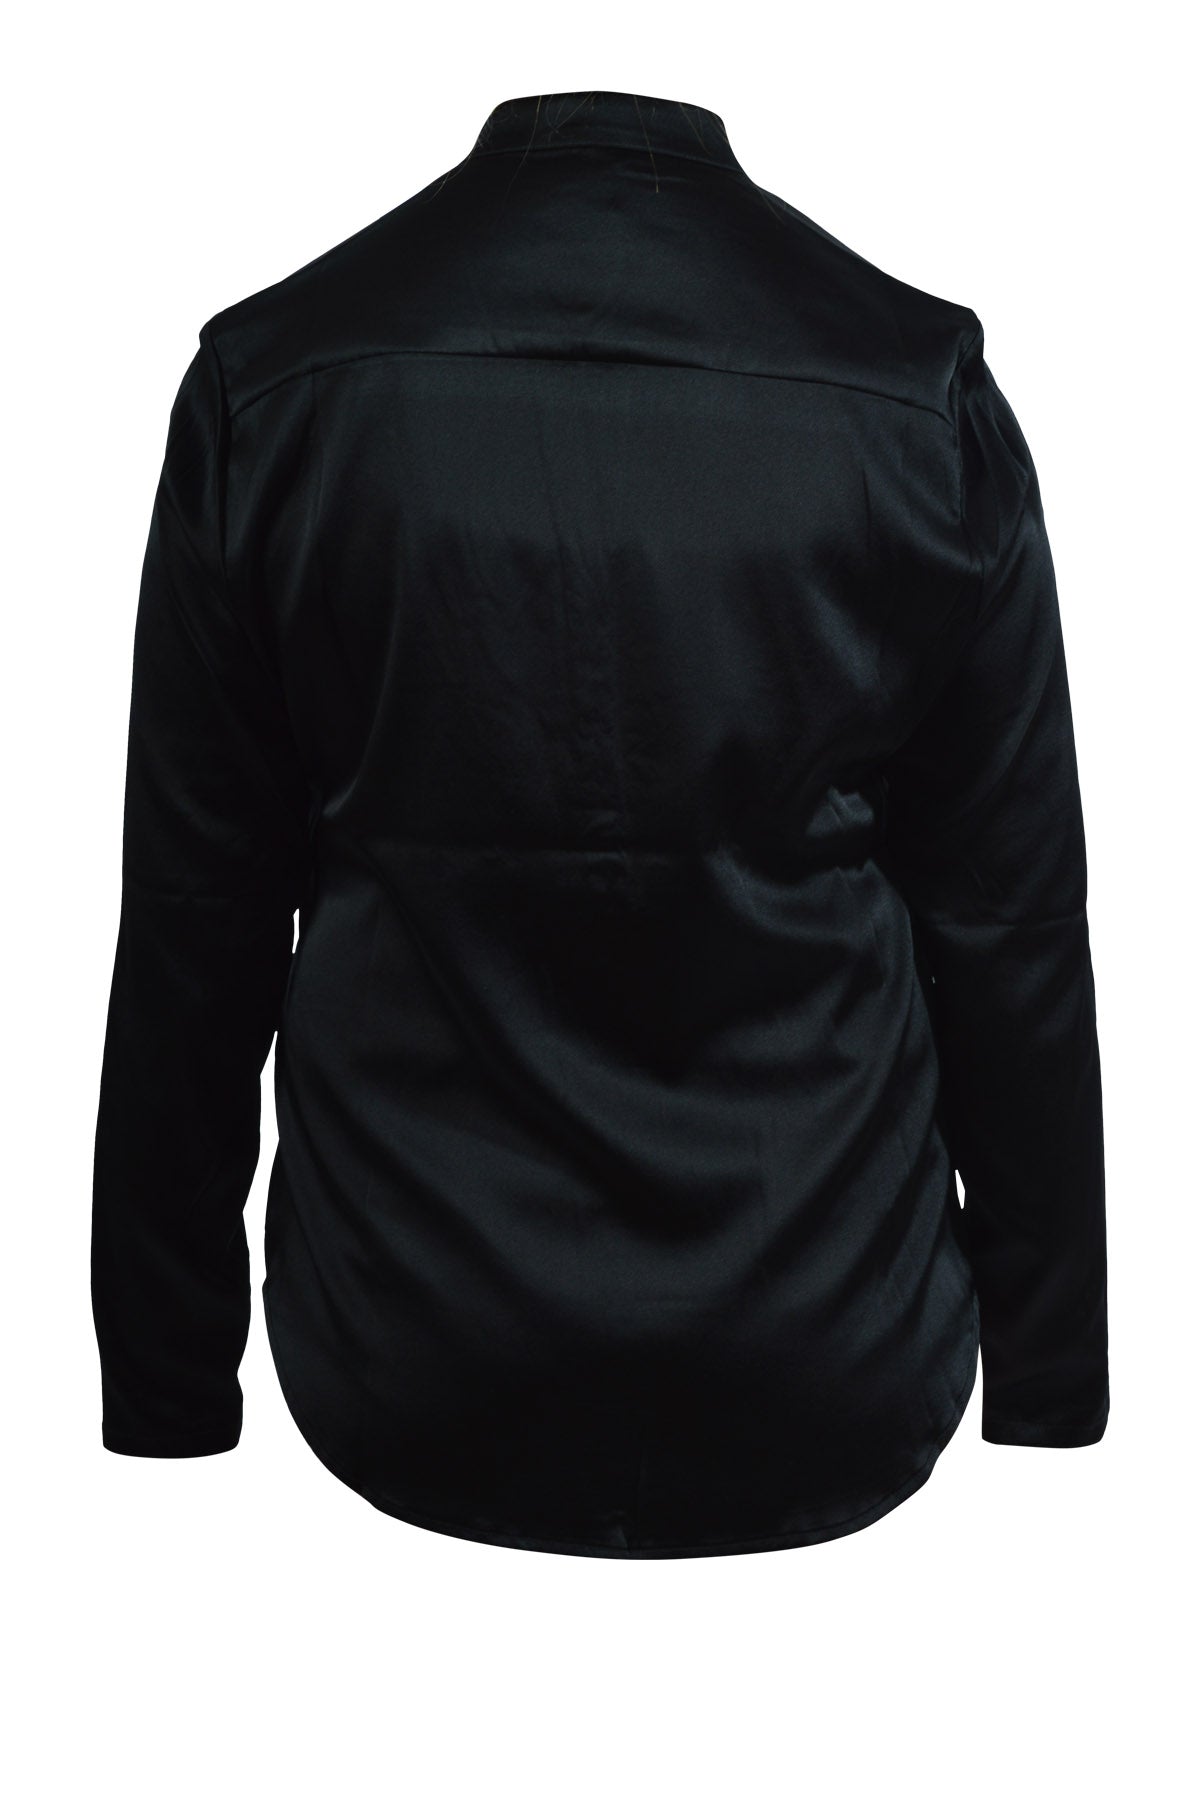 Charlotte Sparre New Slim Shirt 2213, Black